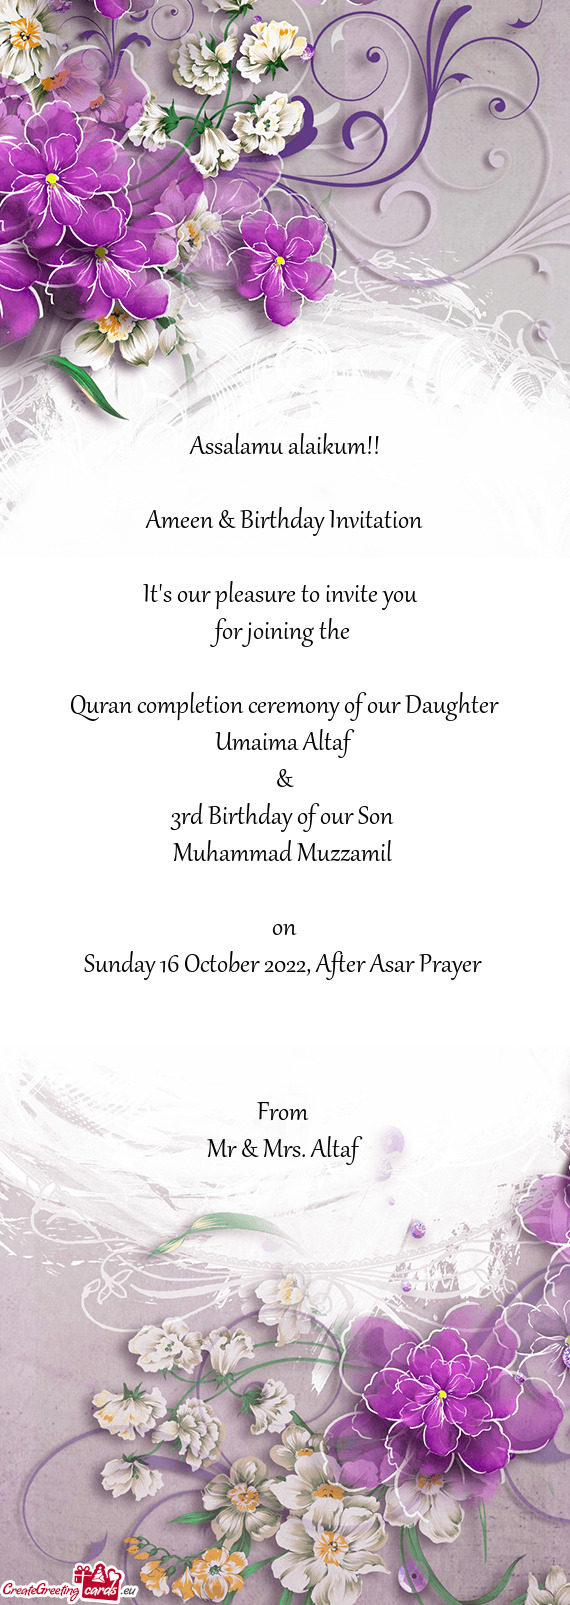 Ameen & Birthday Invitation